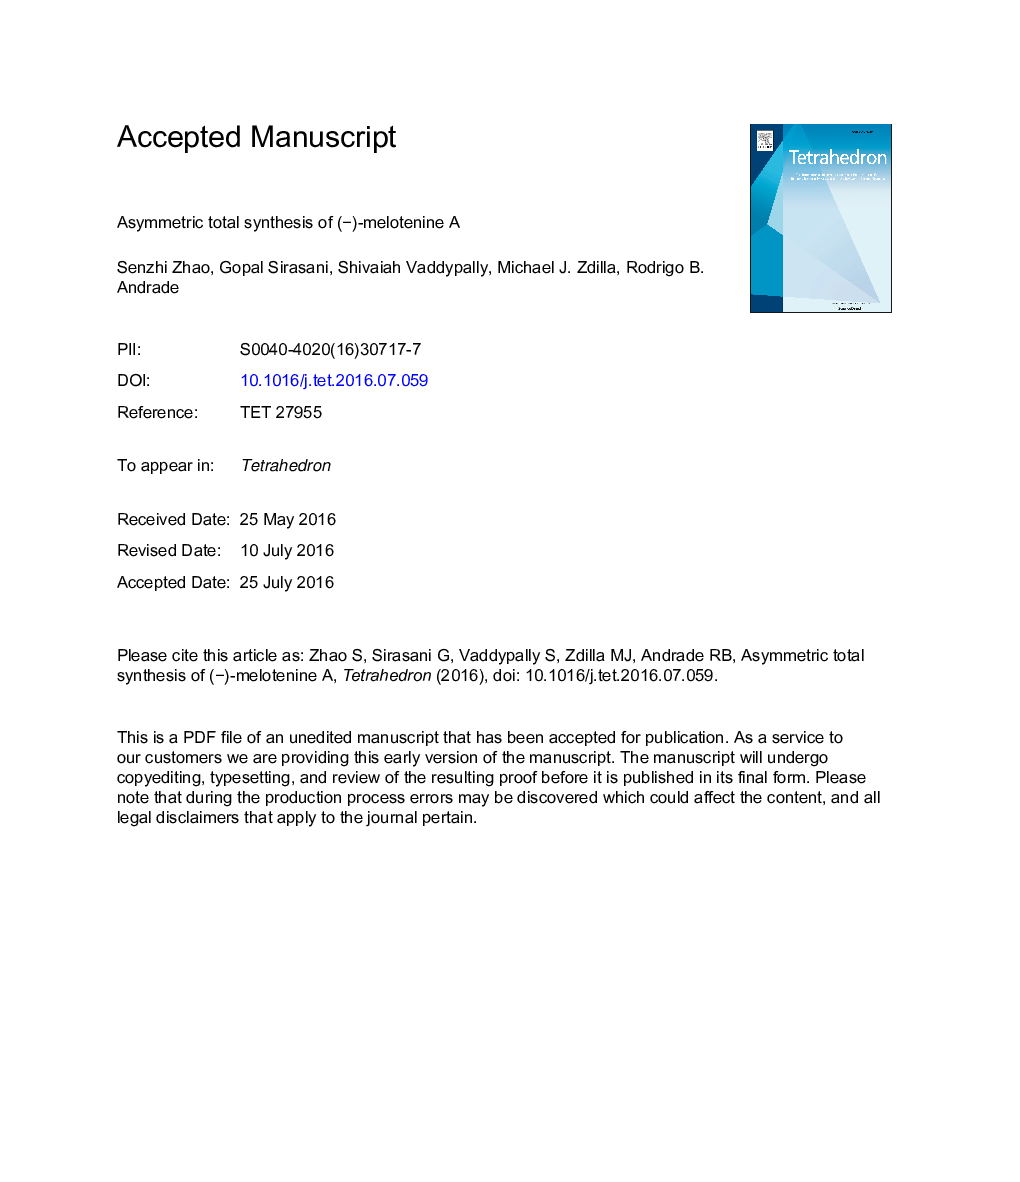 Asymmetric total synthesis of (â)-melotenine A